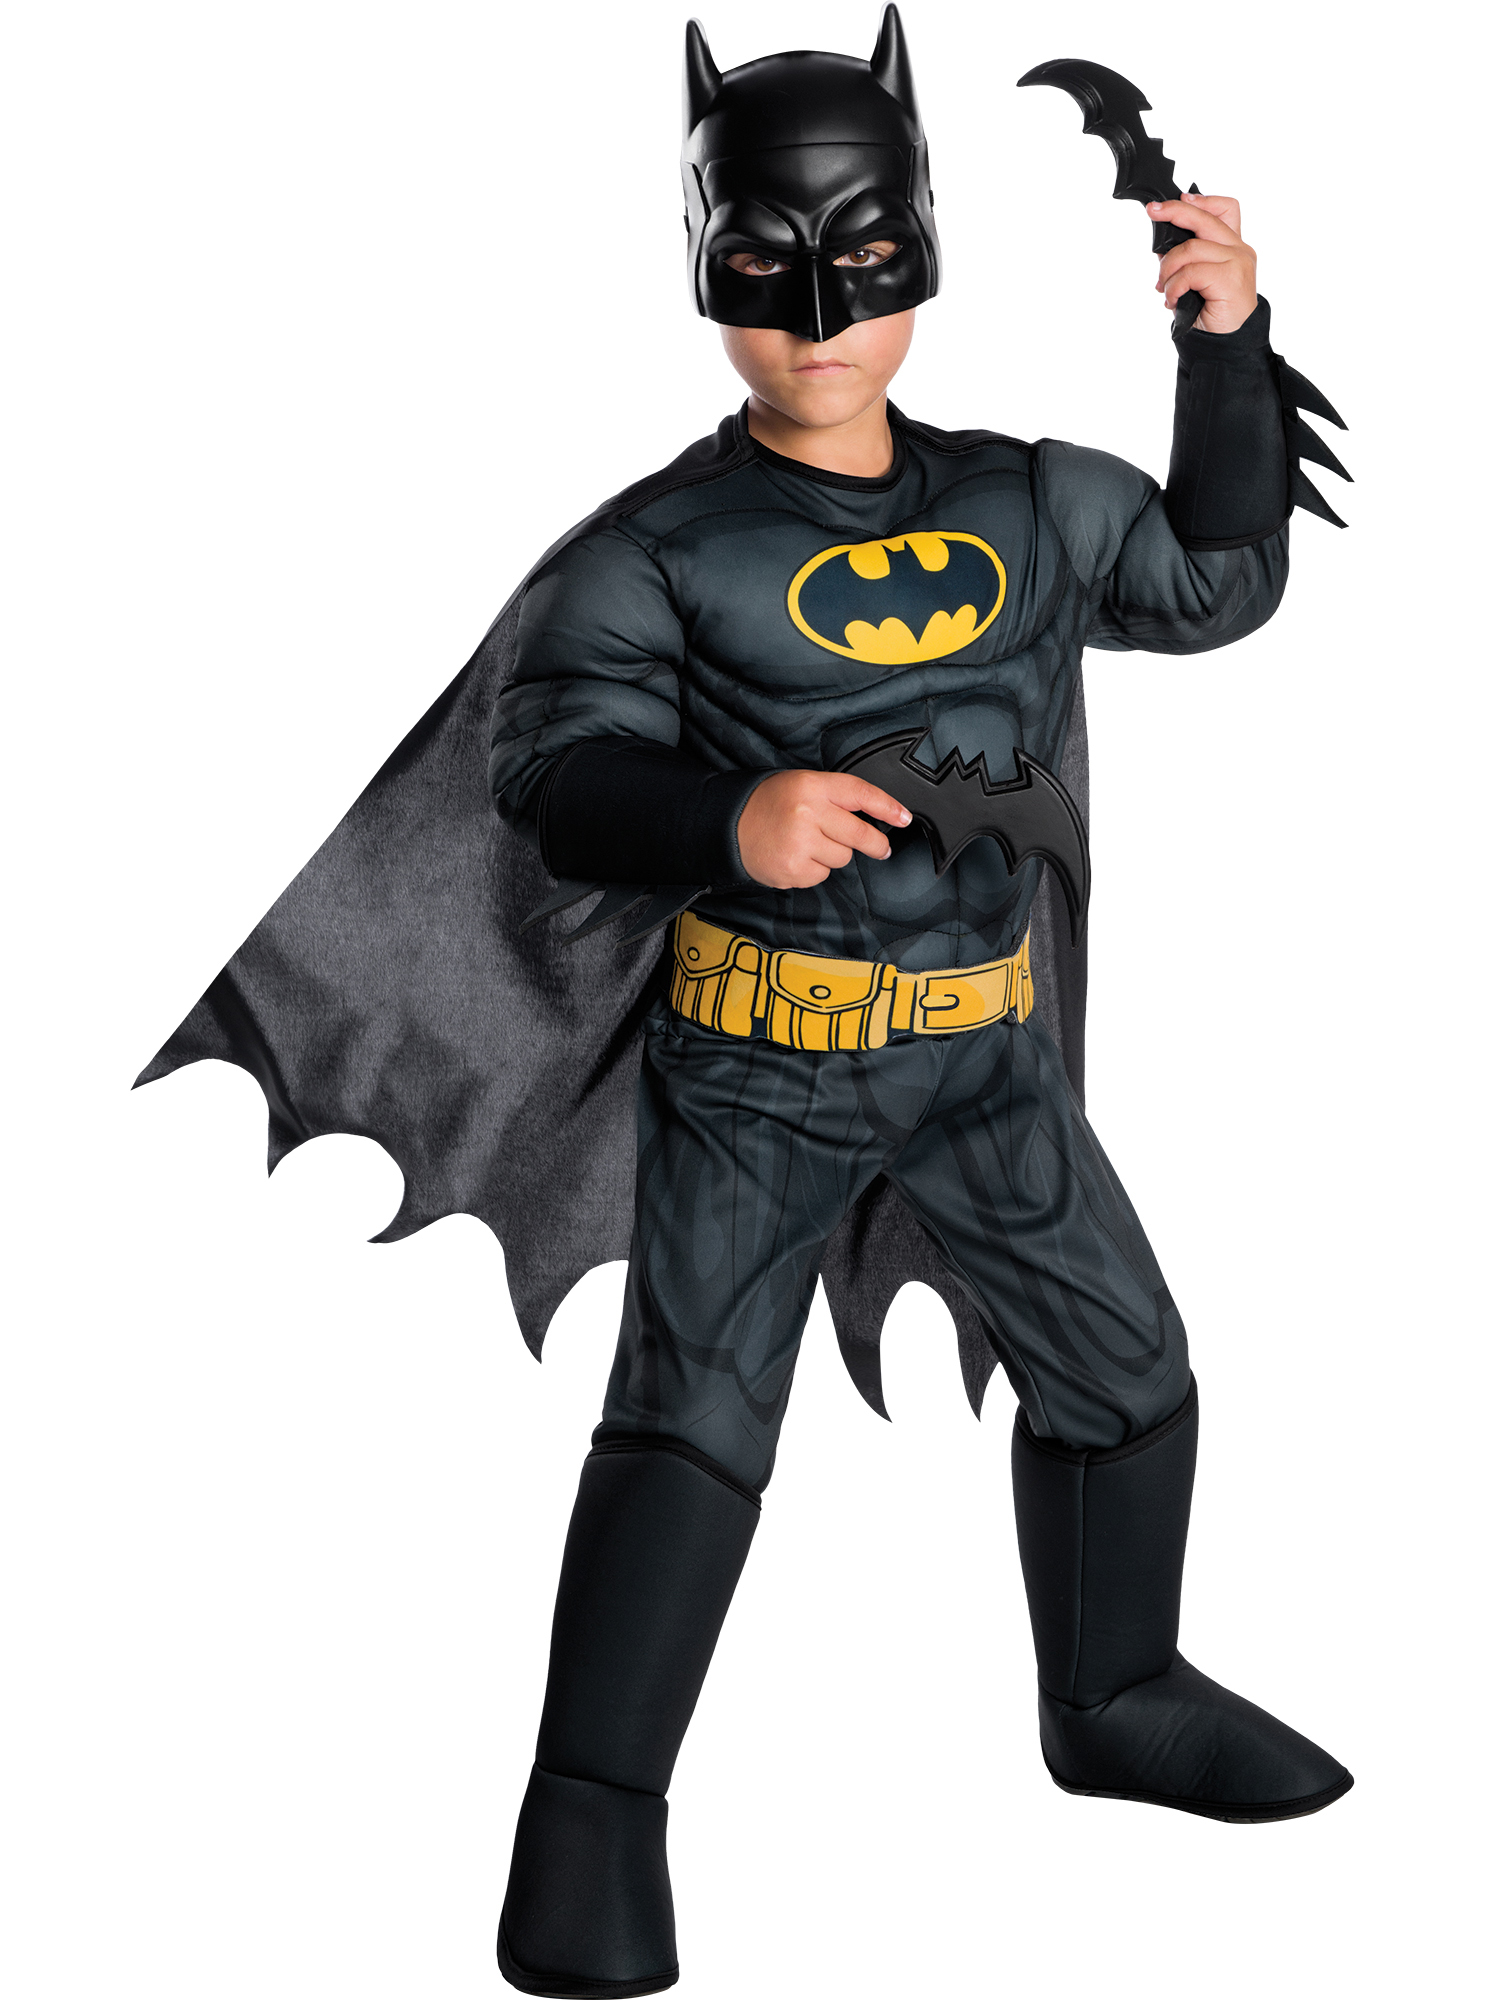 DC Comics Deluxe Batman Child Costume - image 1 of 5